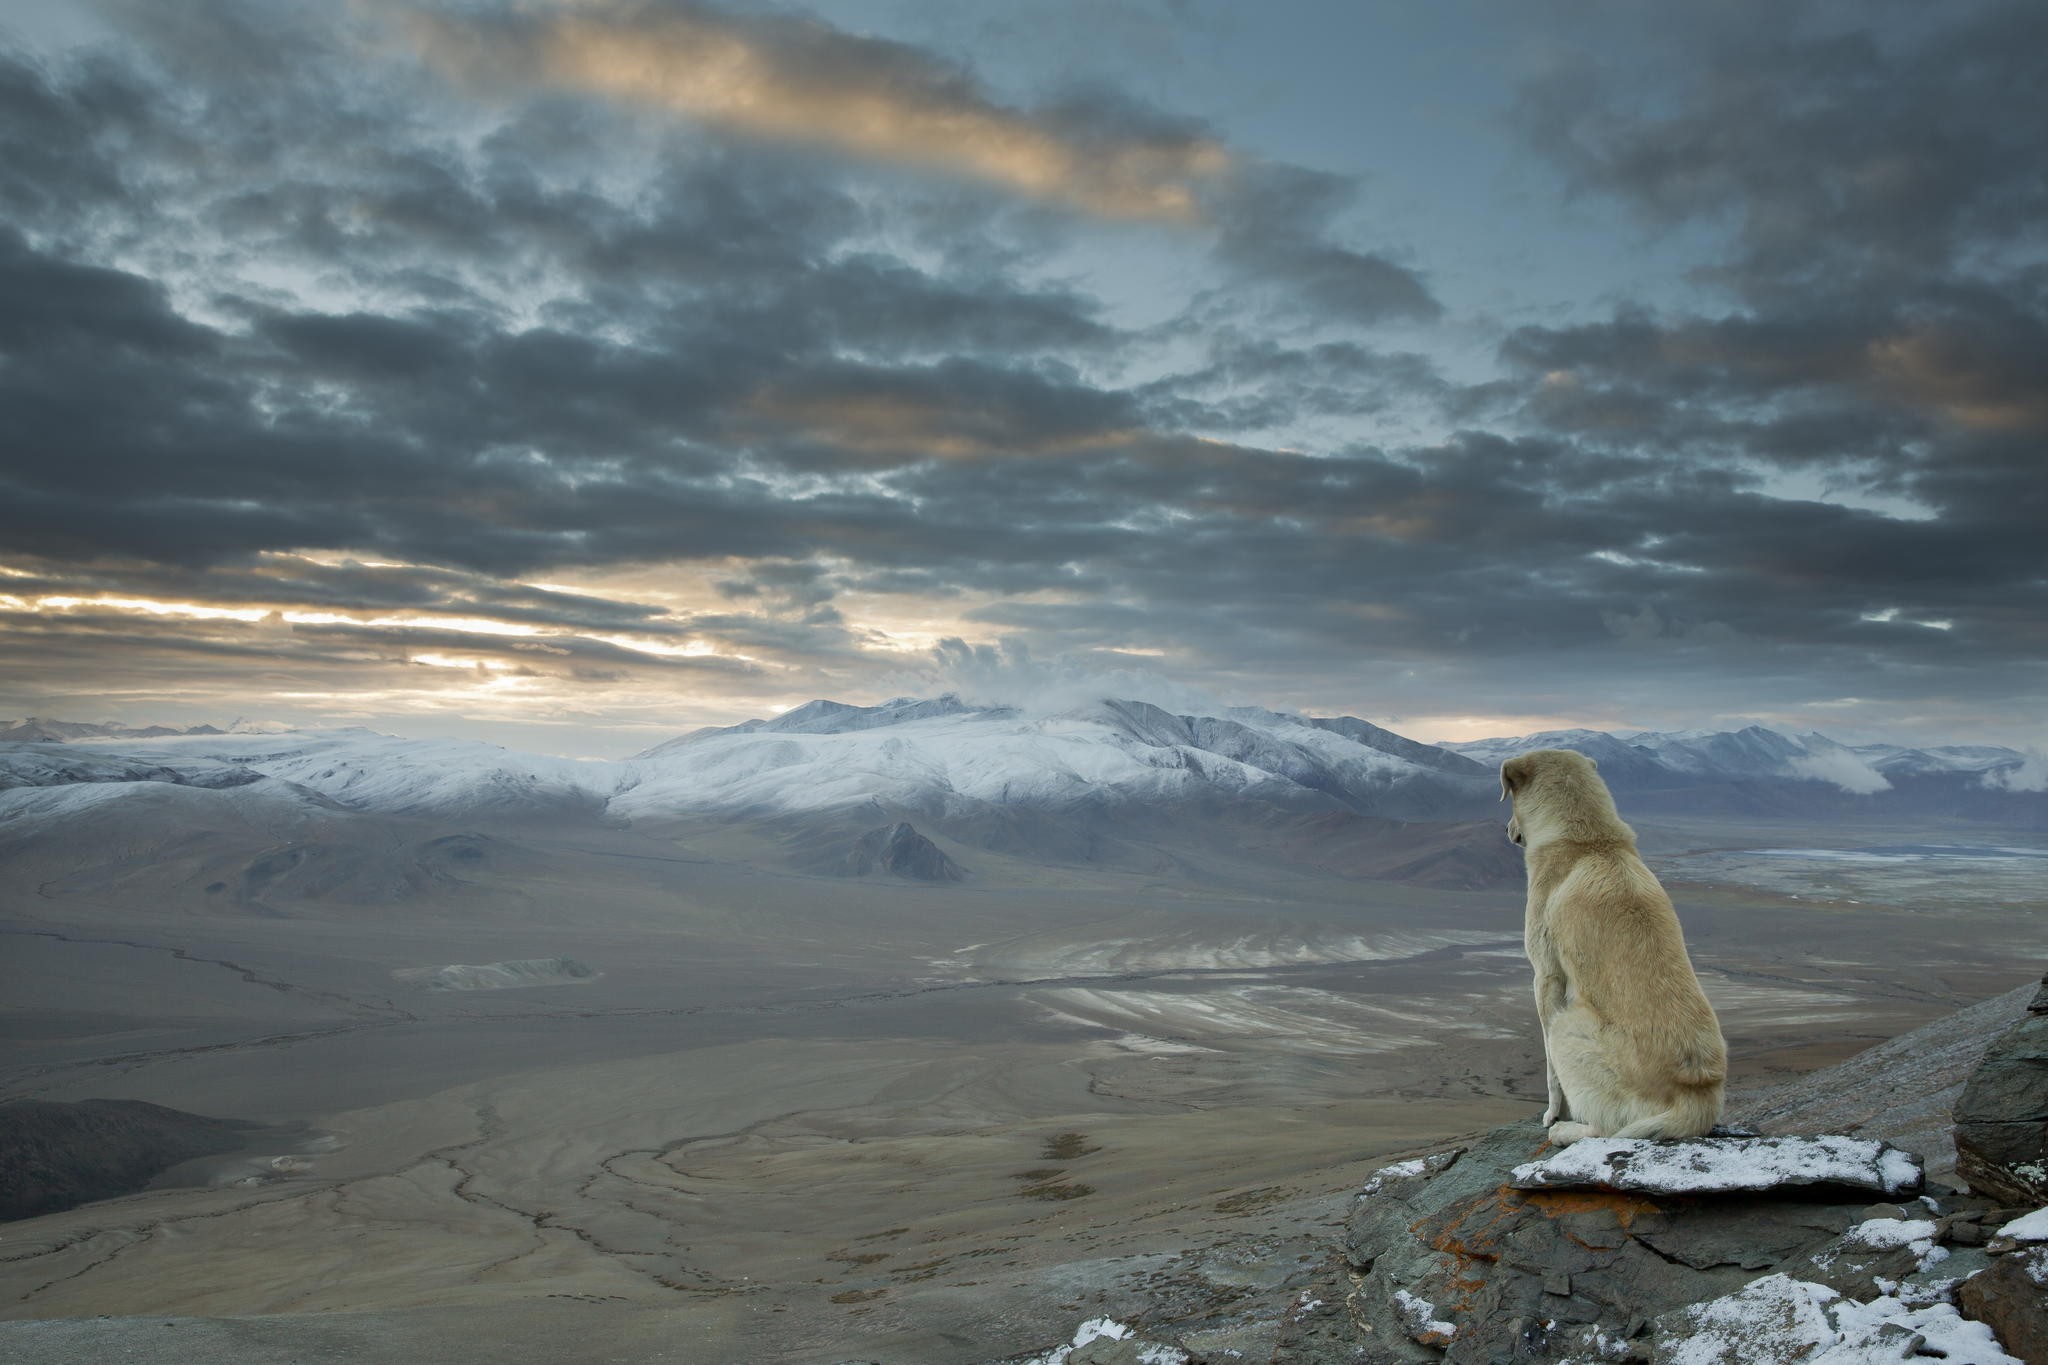 General 2048x1365 dog nature mountains animals landscape sky mammals India panorama Himalayas